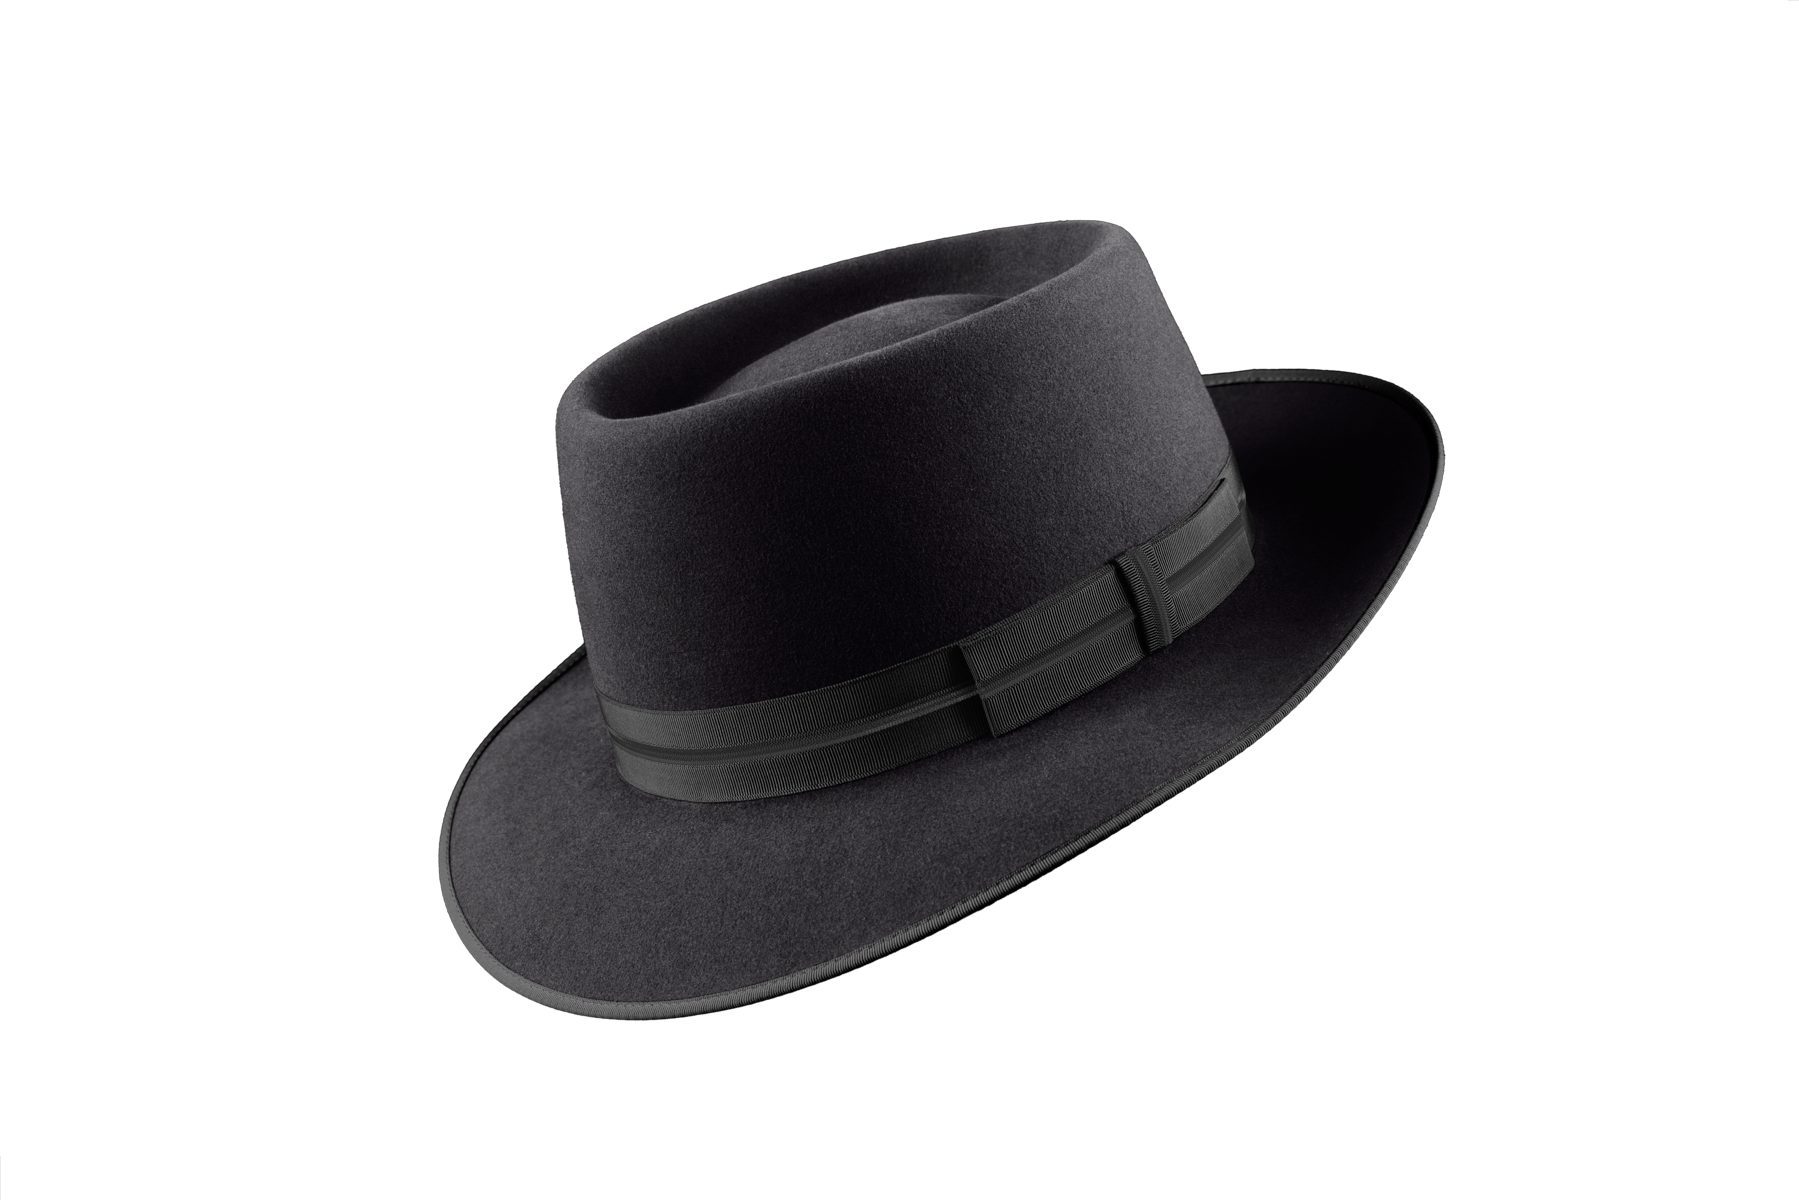 Optimo Hats: The Art of the Hatmaker